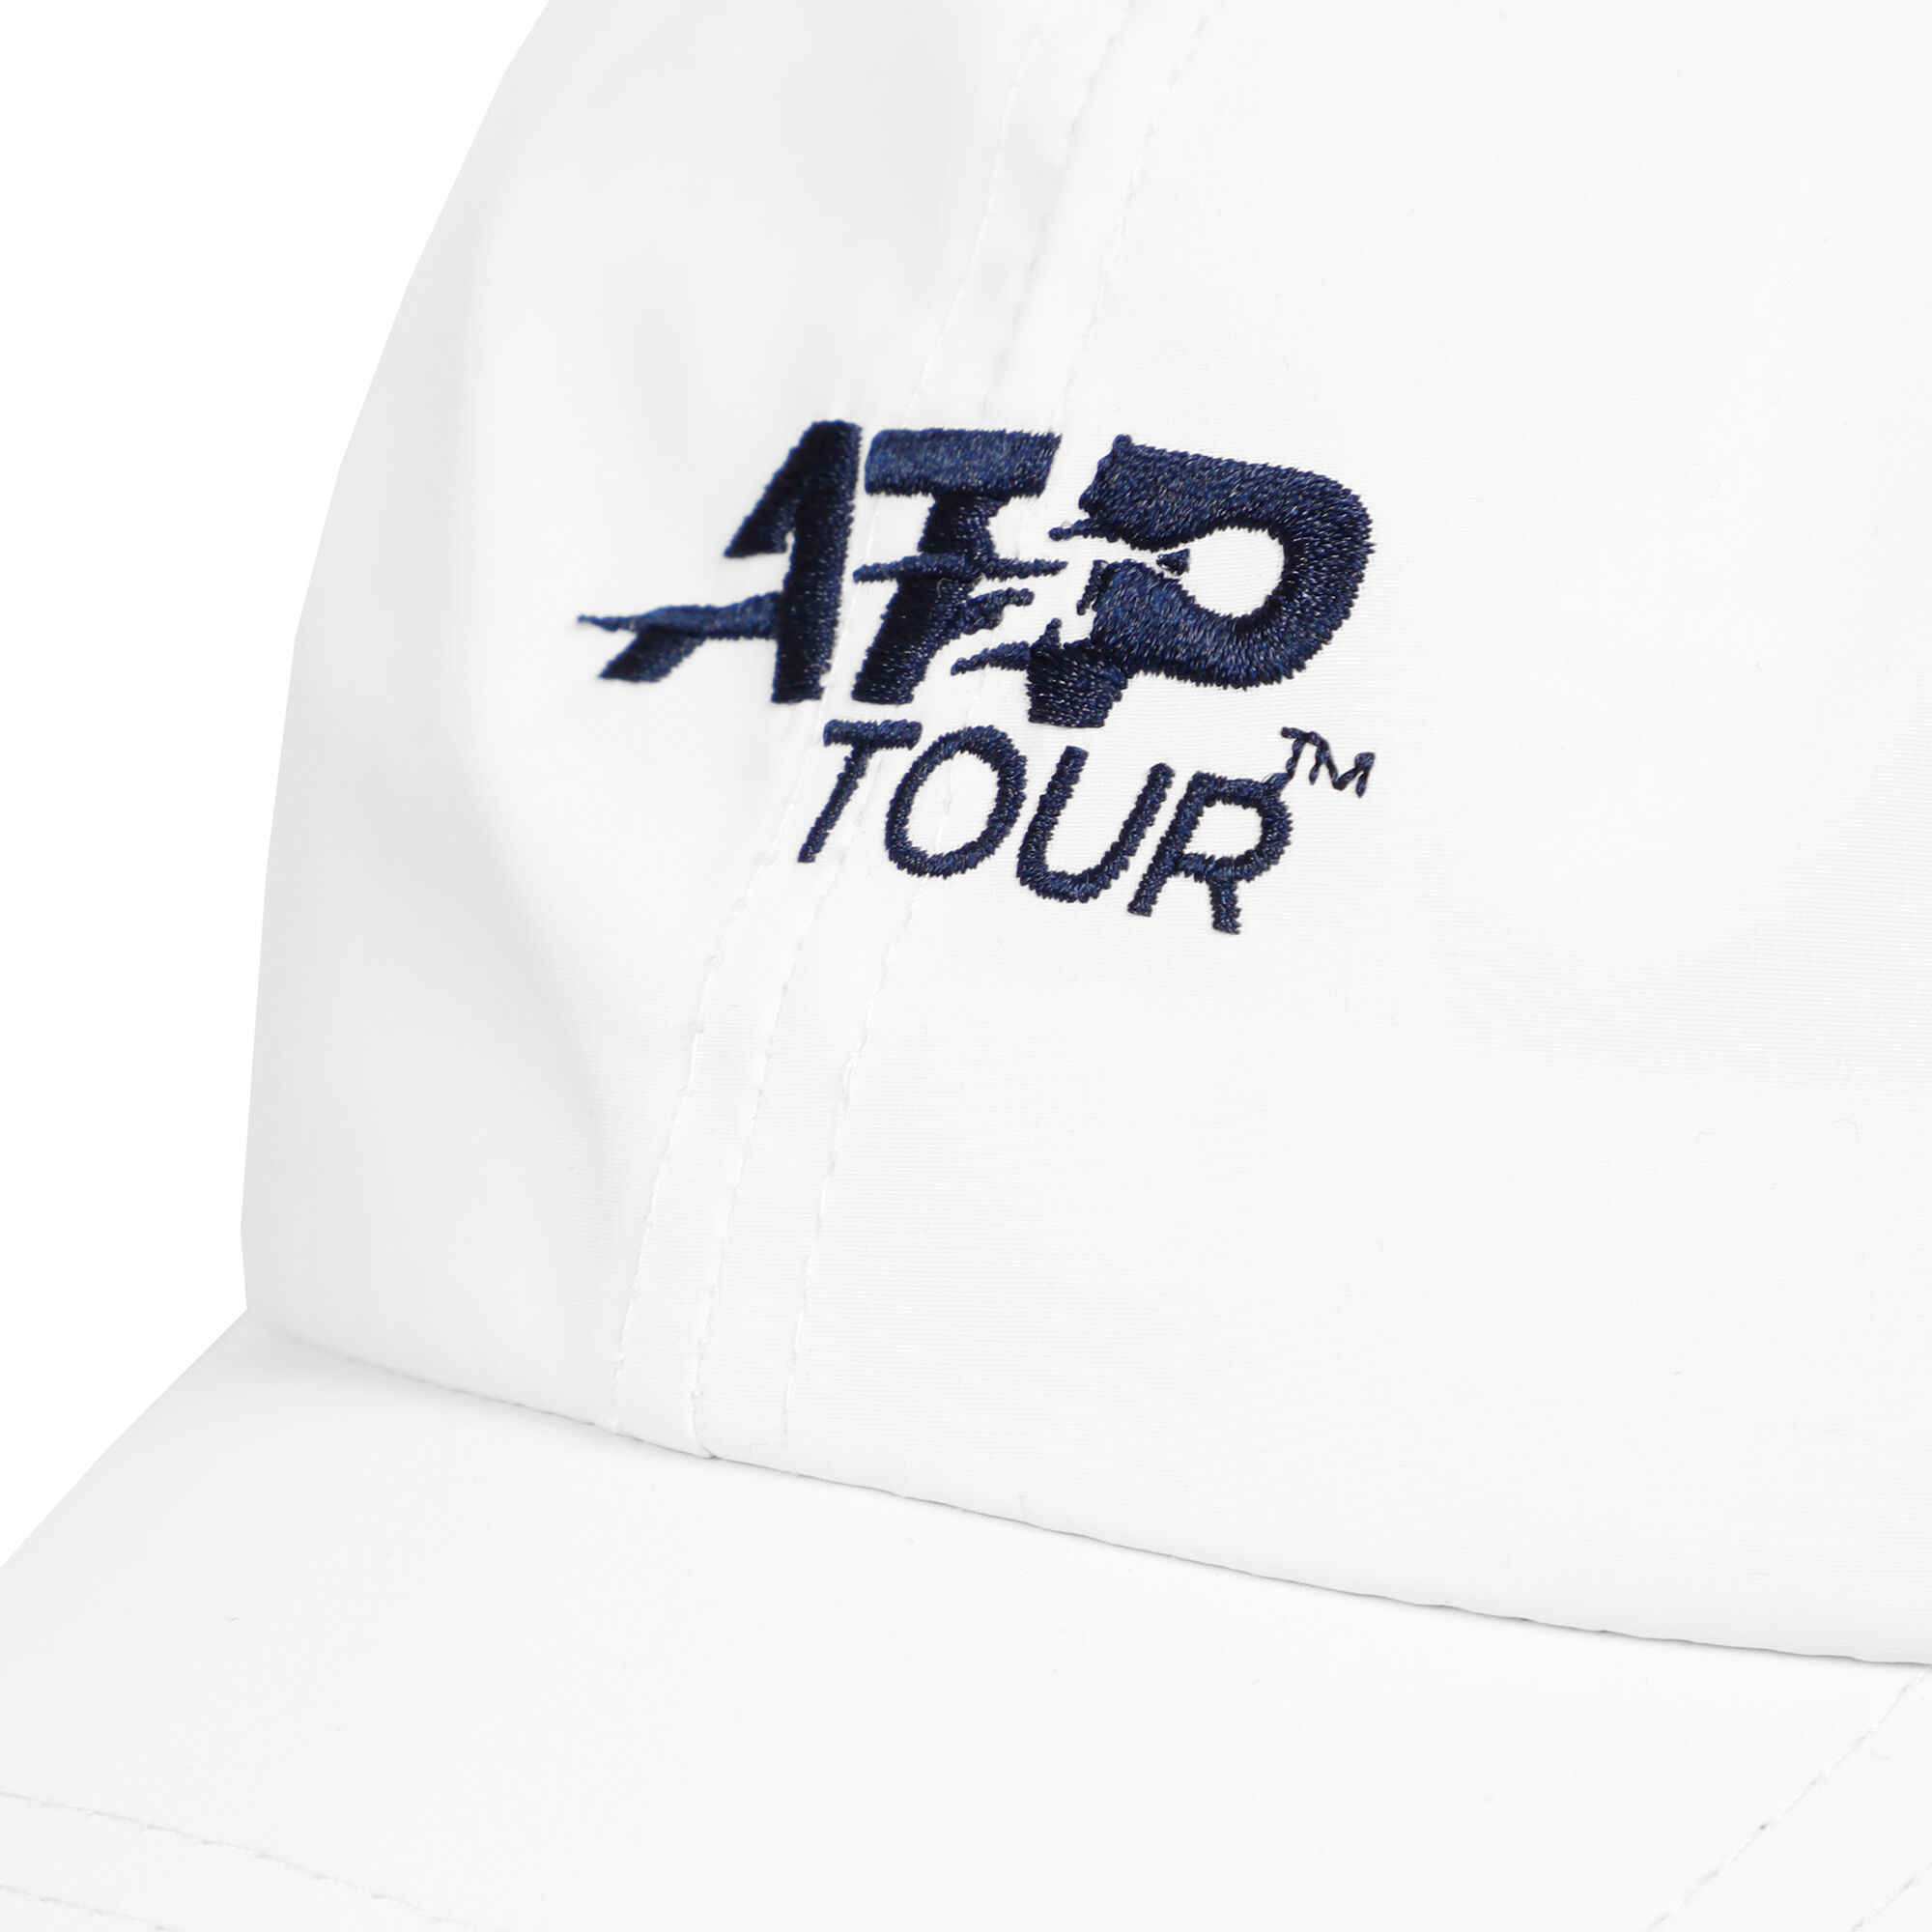 ATP Tour